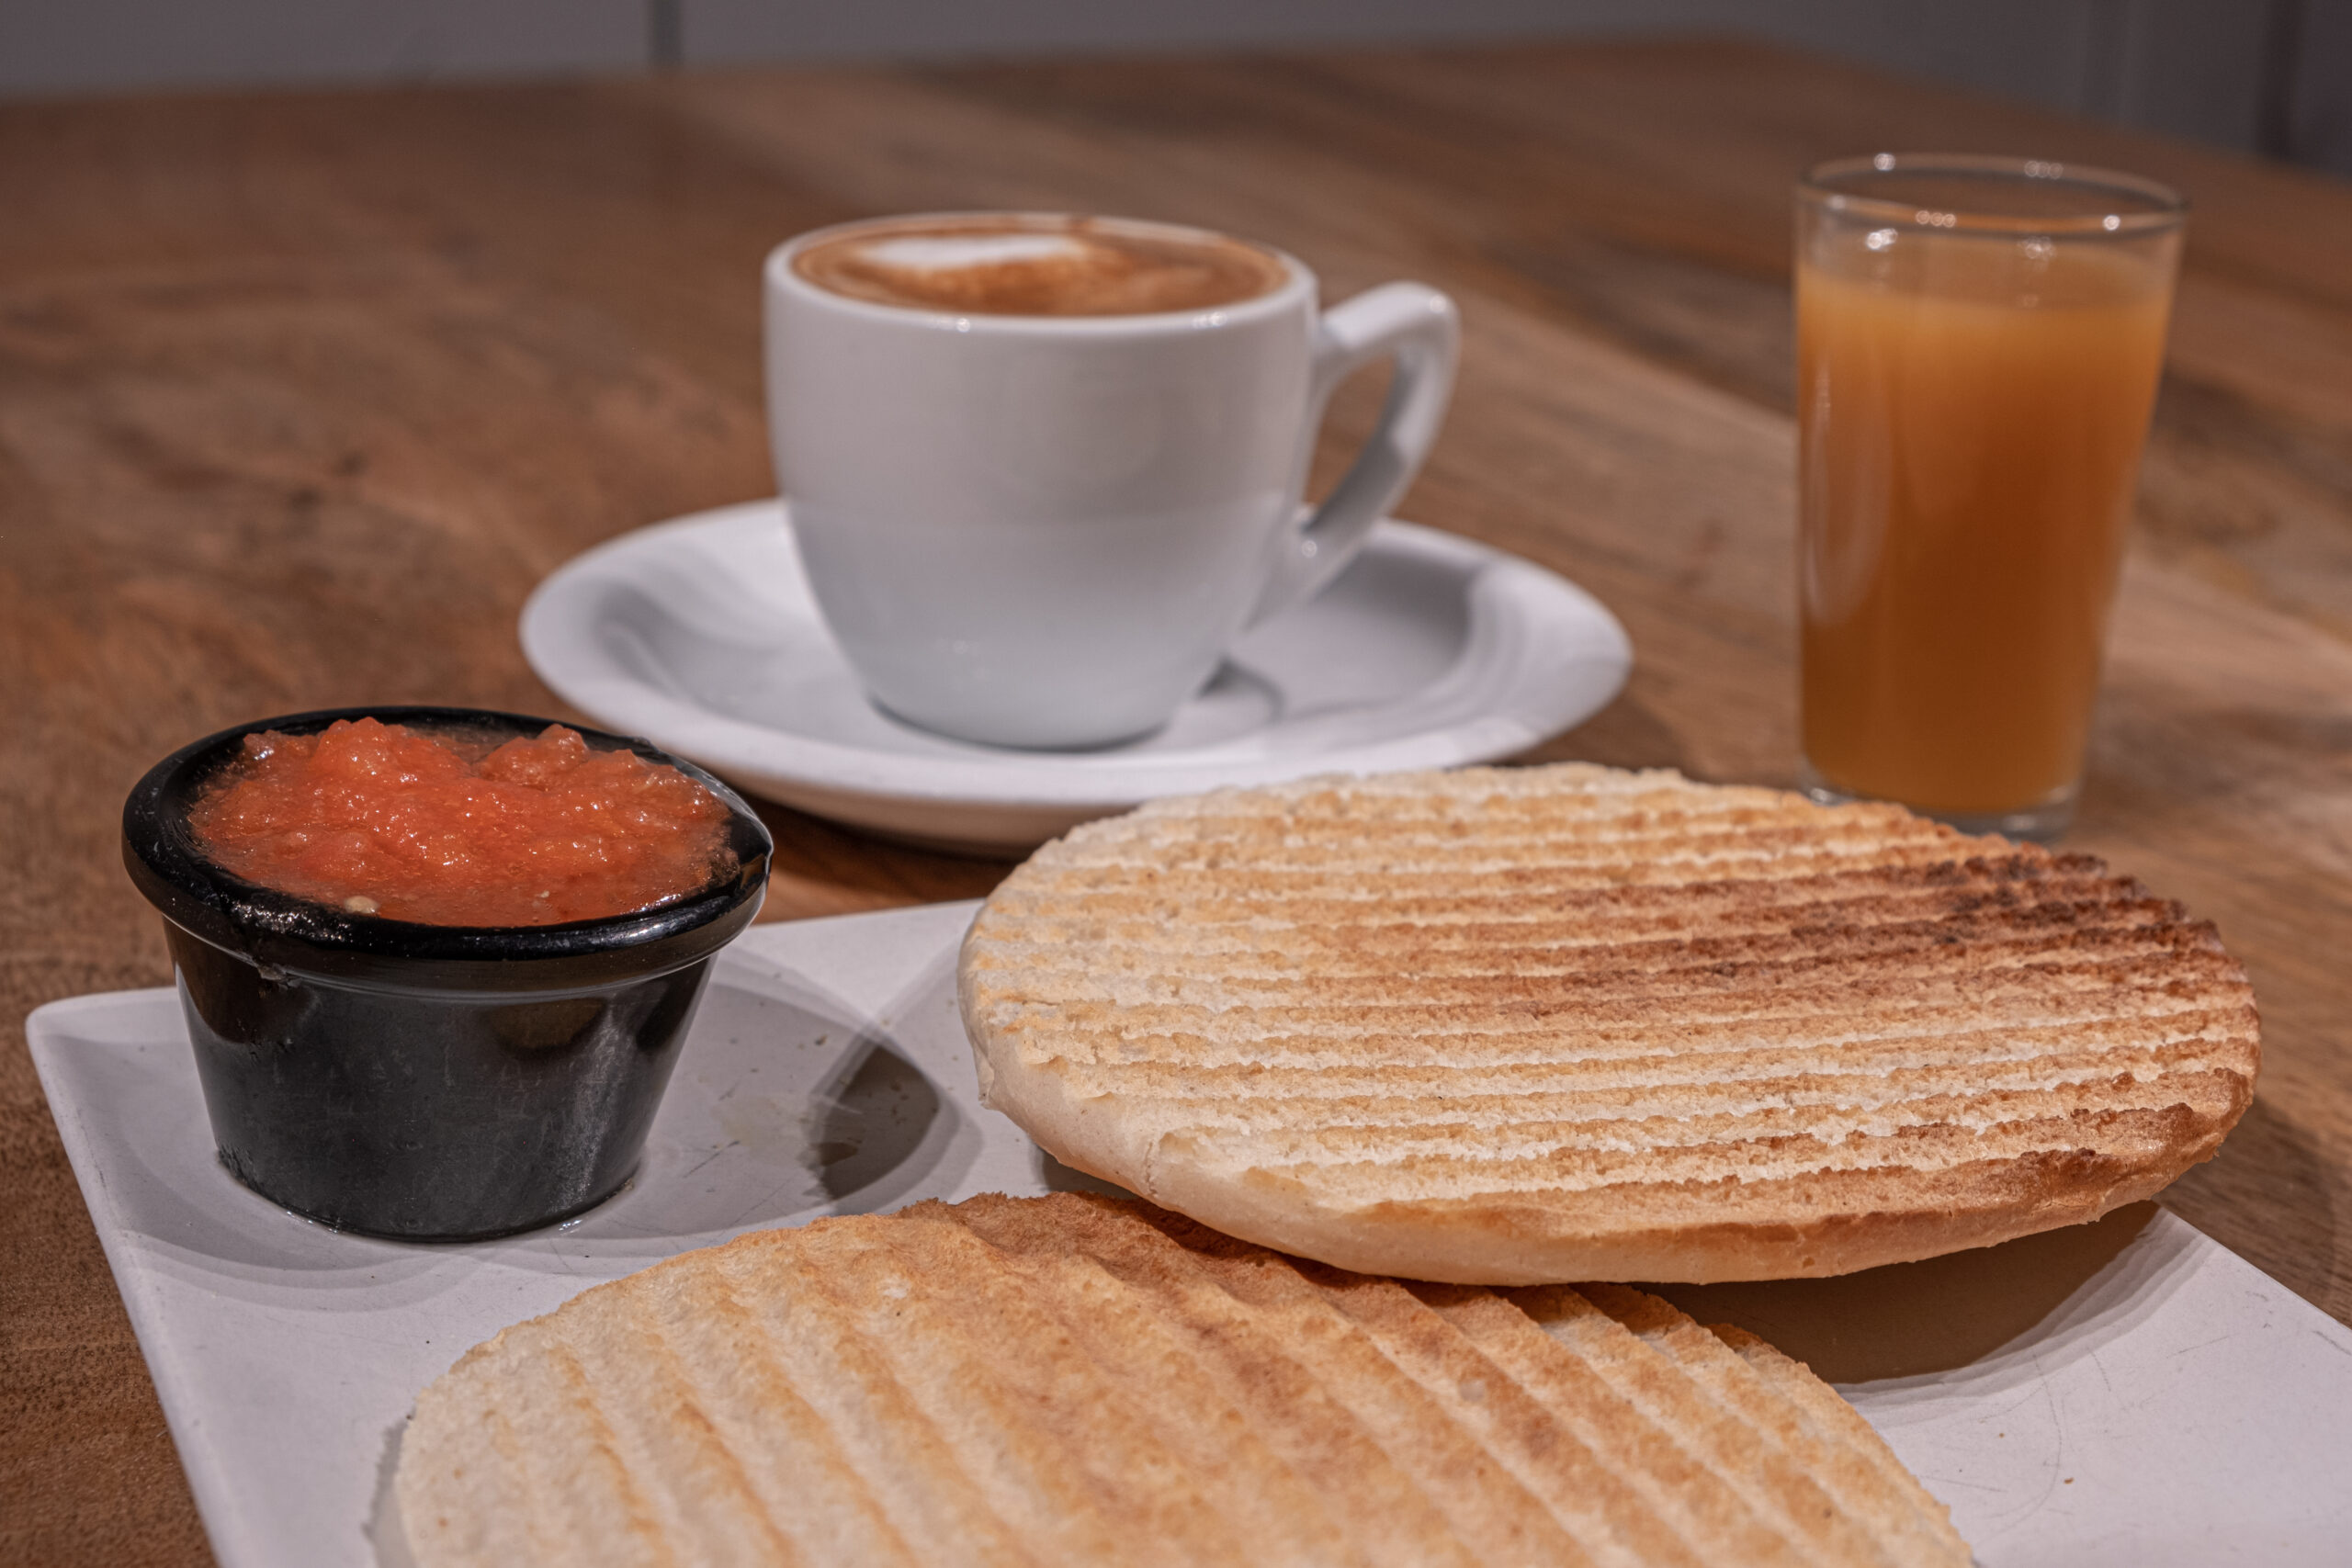 Desayuno piraña con molletes, tomate natural, zumo y café